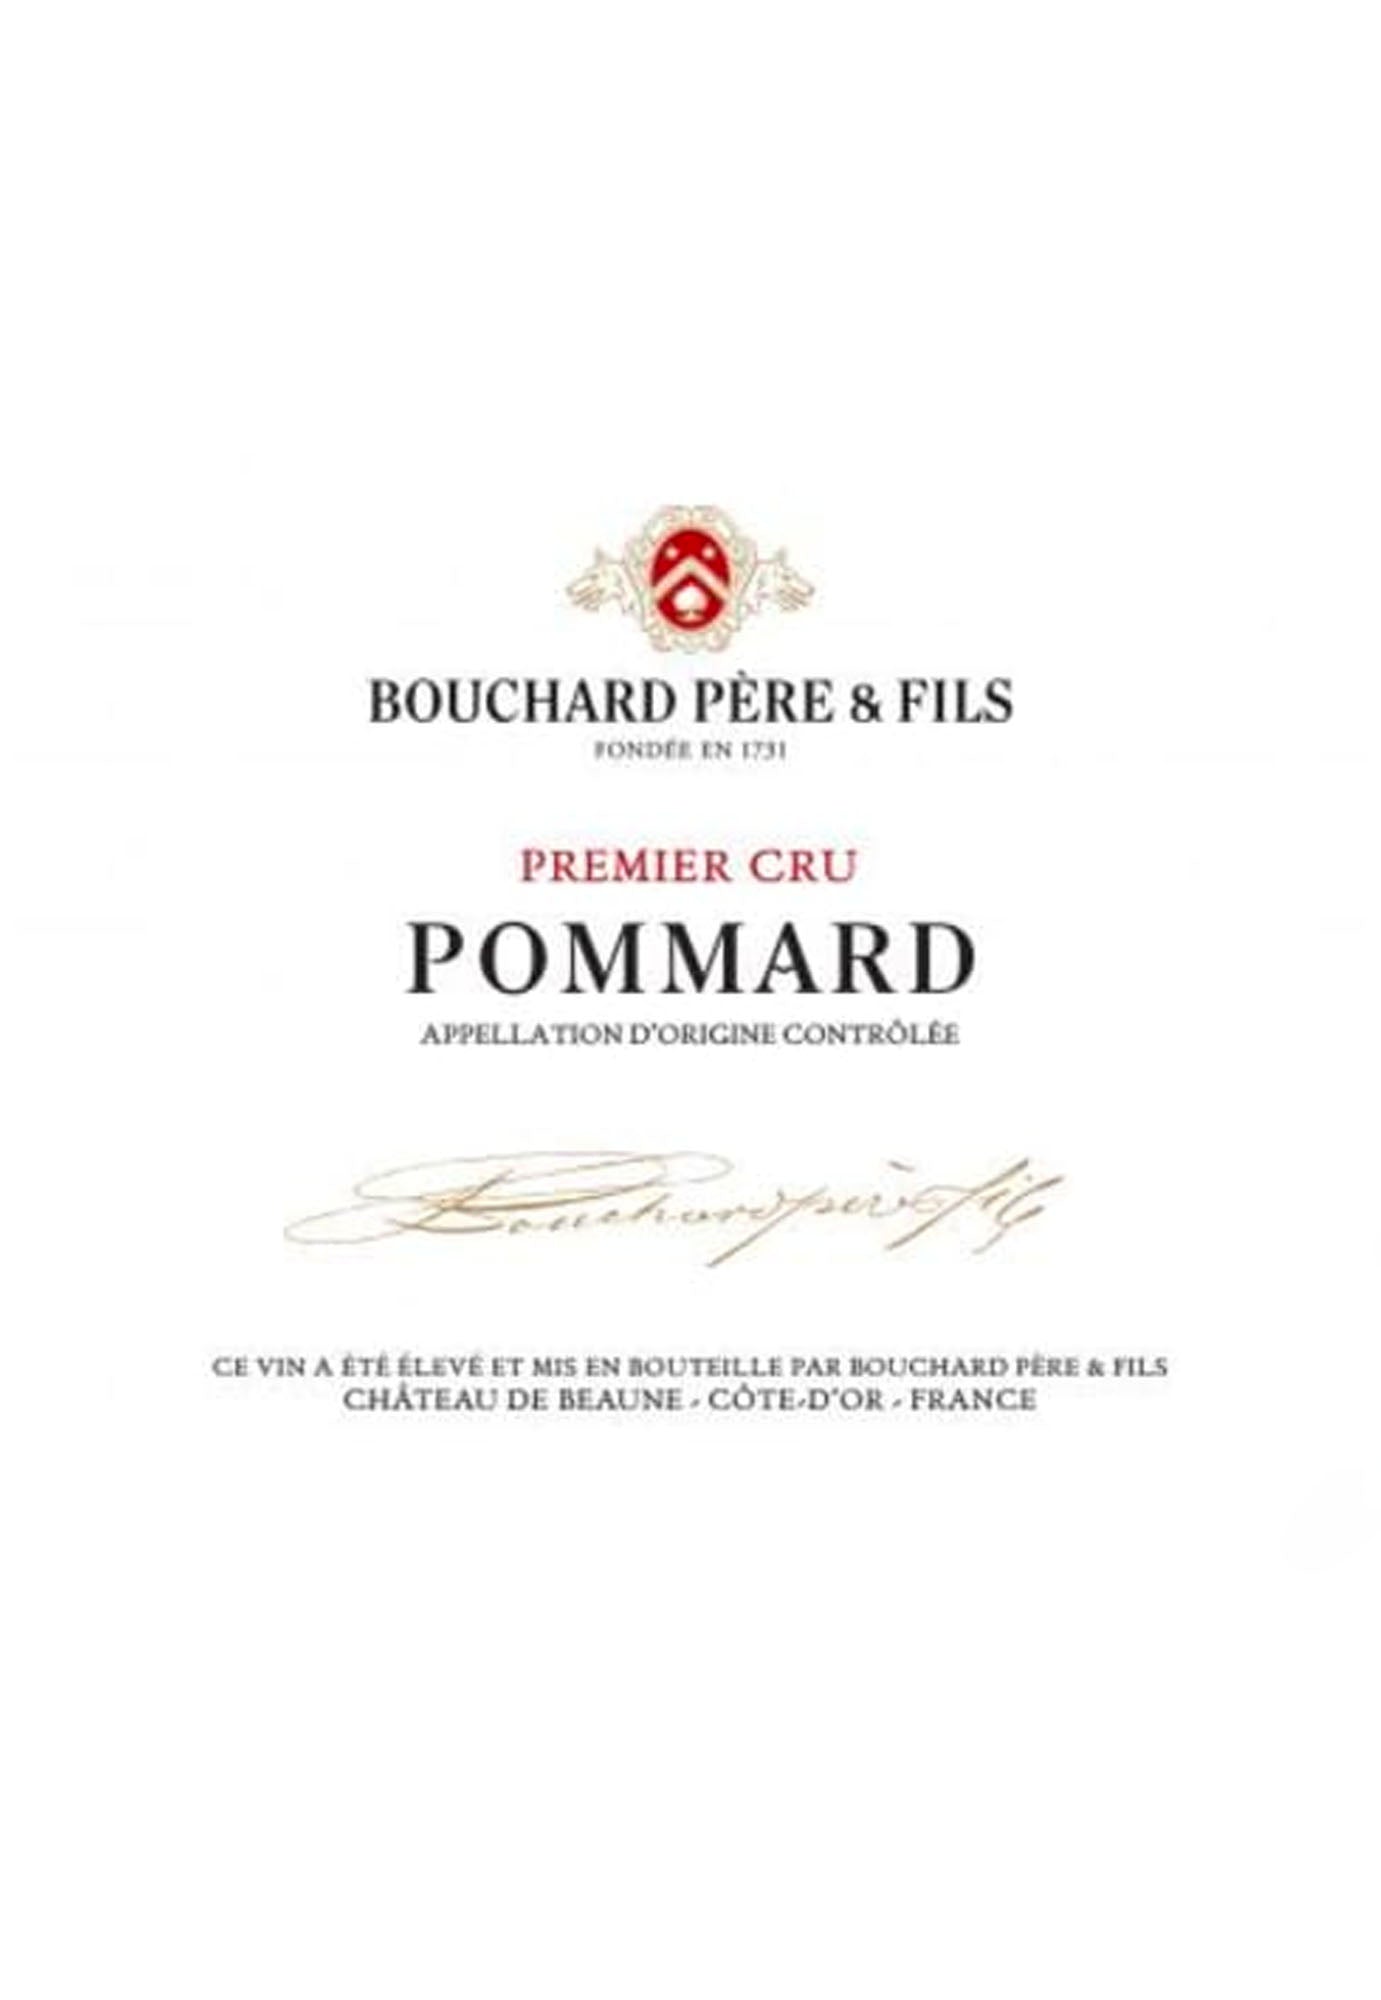 Bouchard Pere & Fils Pommard Premier Cru 2014